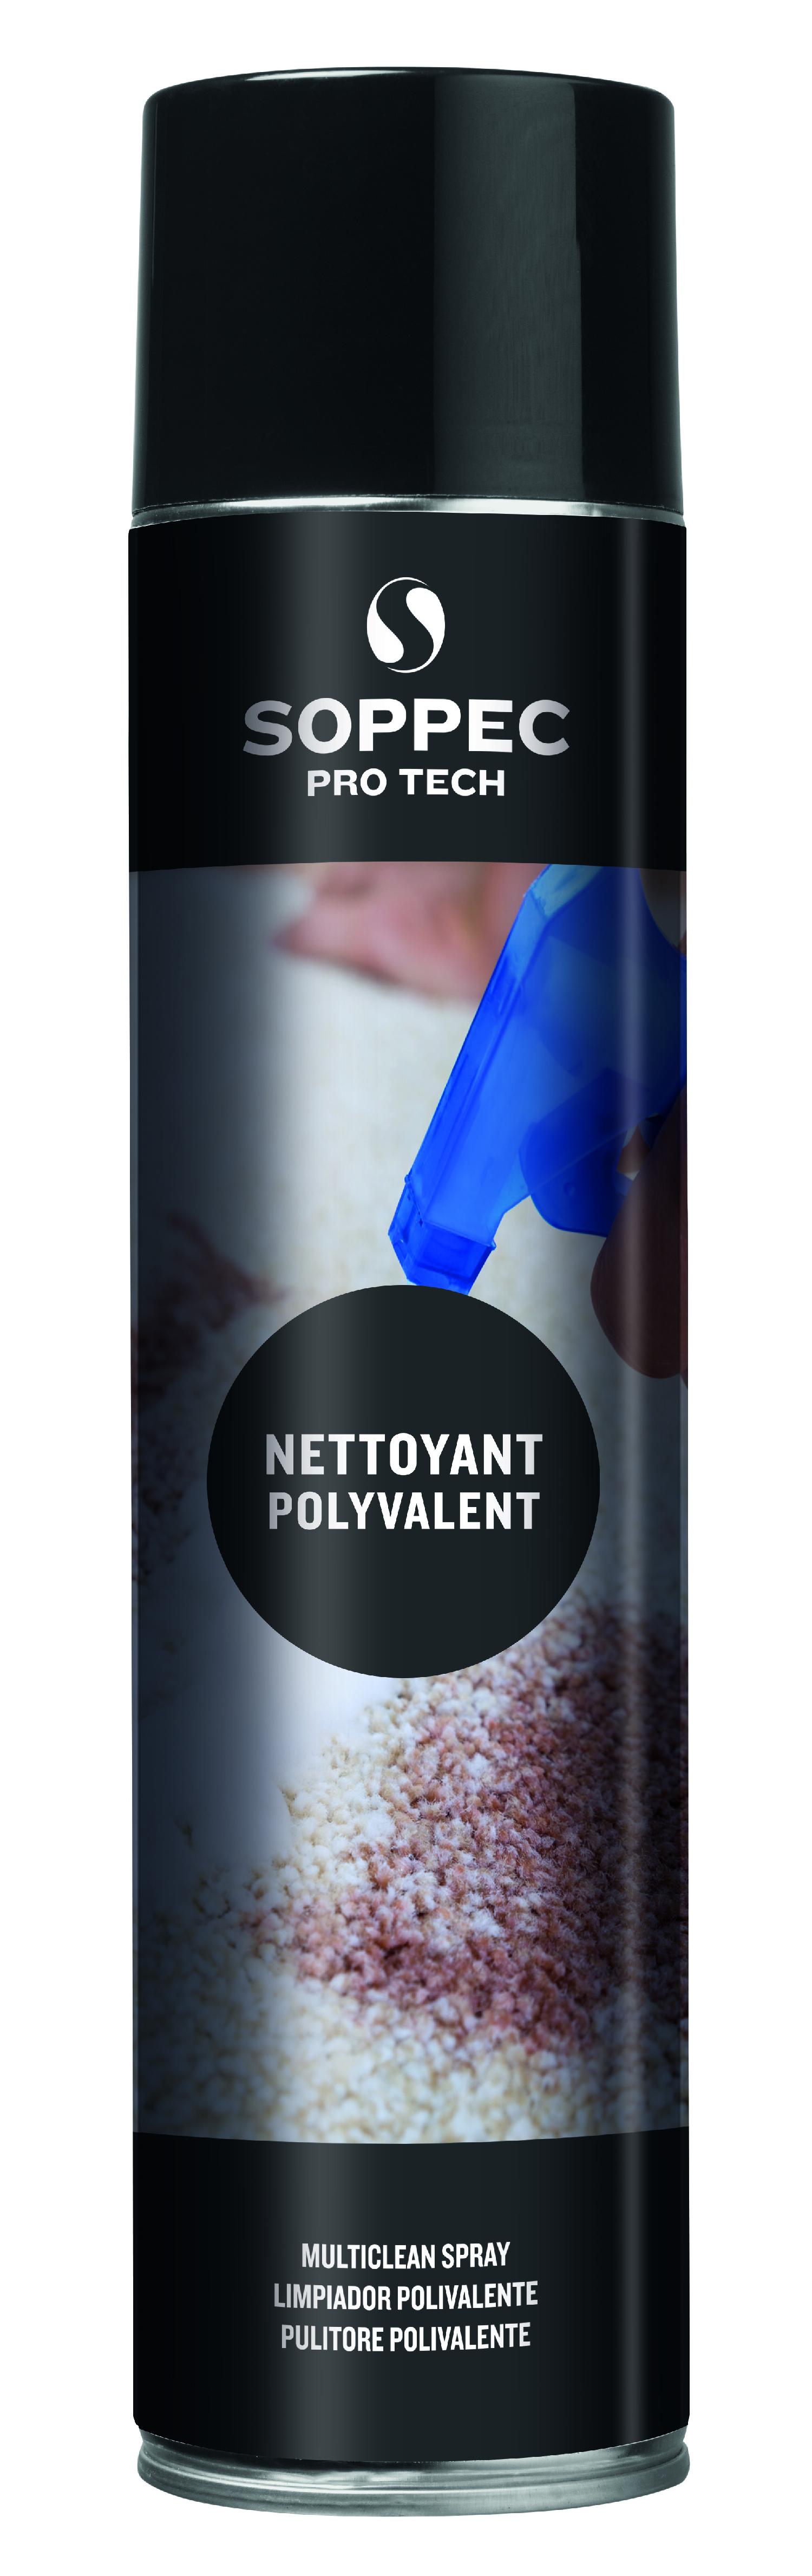 Nettoyant polyvalent